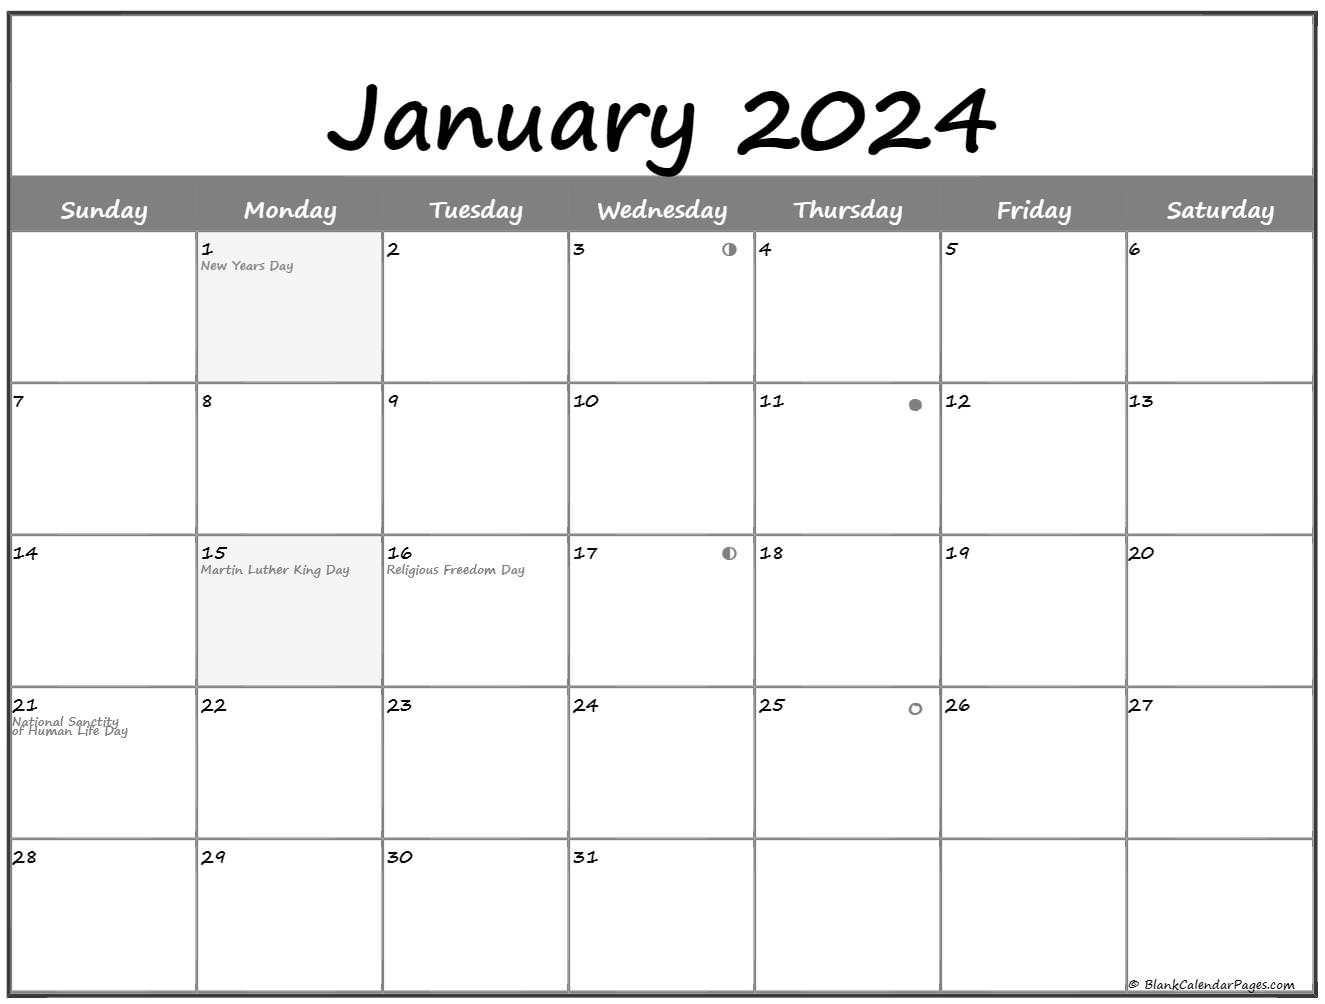 2024 Moon Calendar Calendar With Holidays Dec 2024 Calendar With Holidays